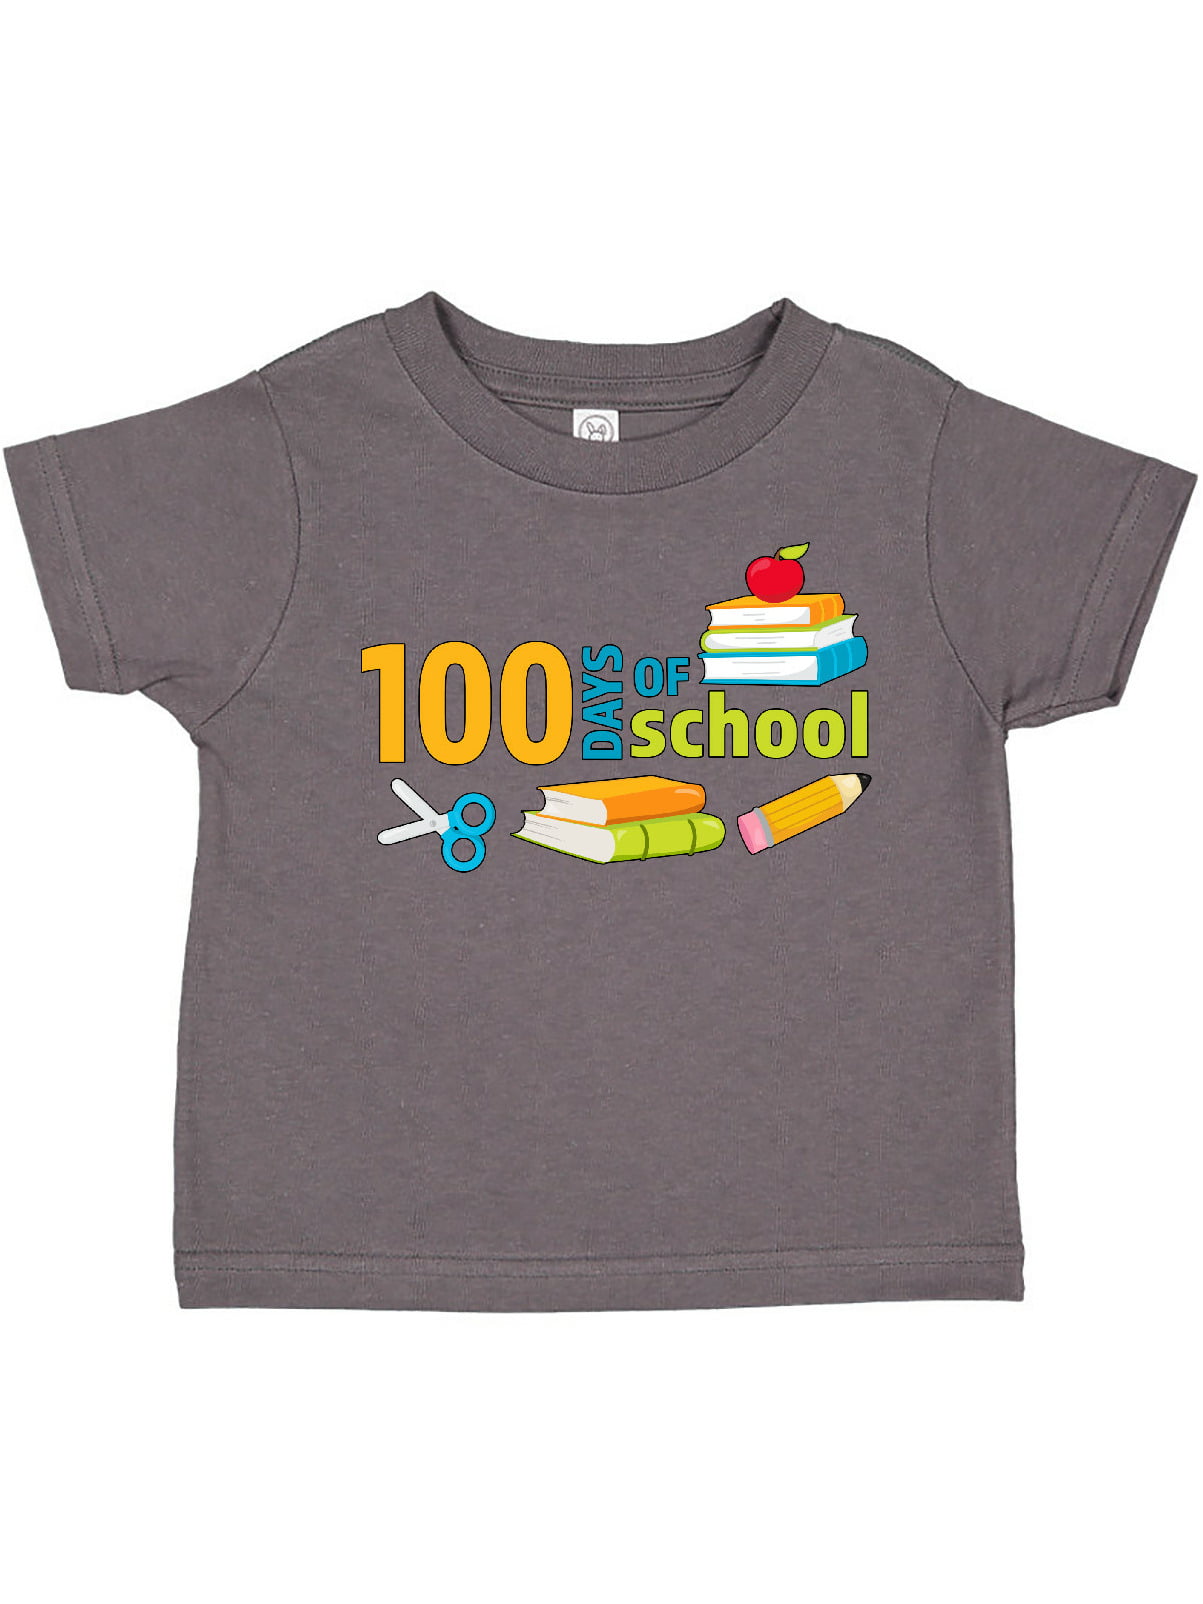 Short-Sleeve Unisex 100 Days of School Teacher T-Shirt